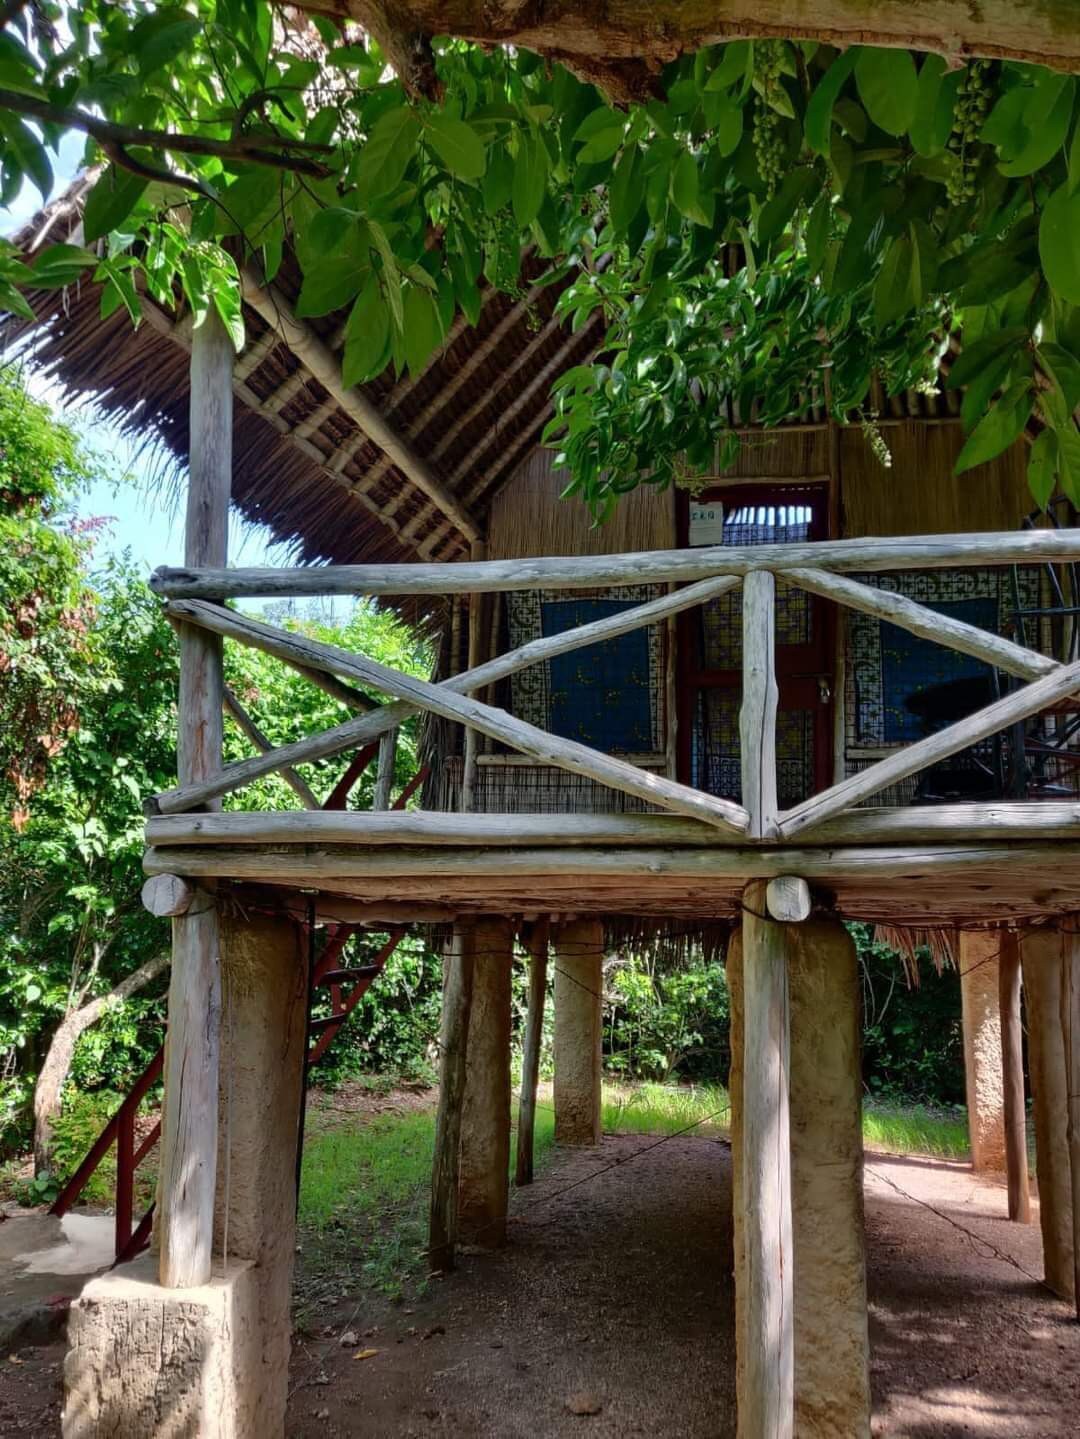 Treehouse in a Wildlife Sanctuary - Beach Access